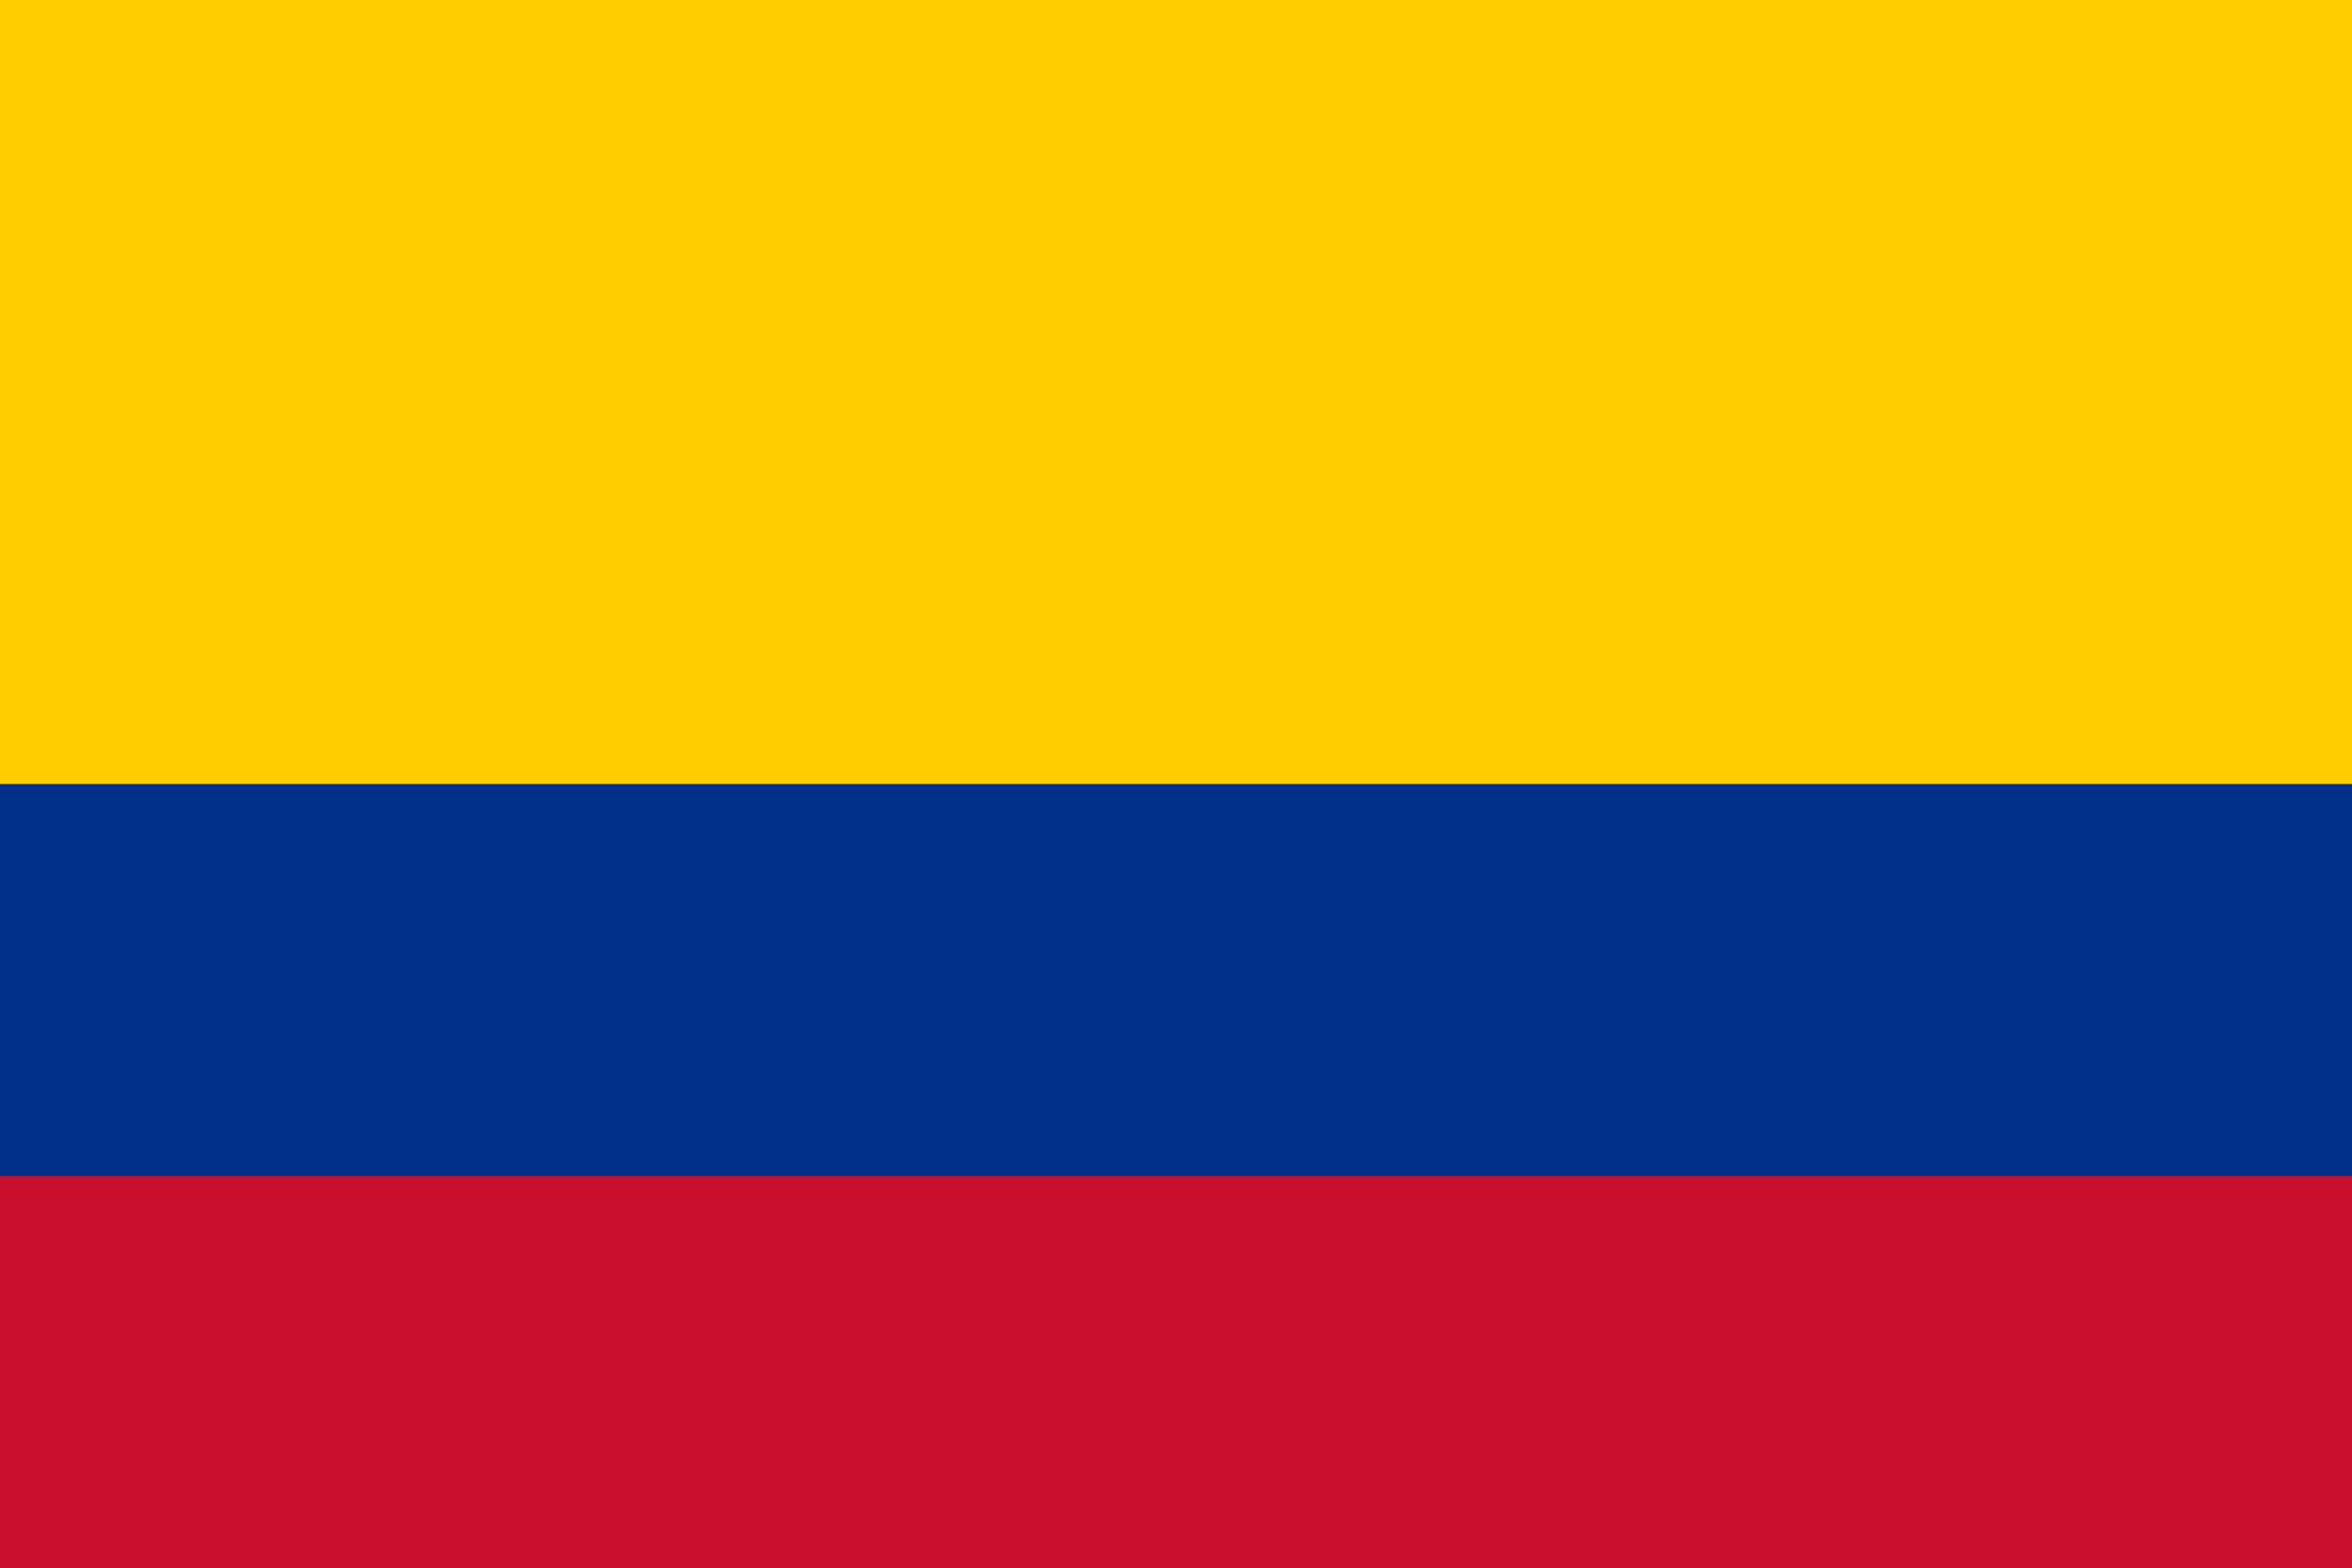 Result Images Of Simbolo De La Bandera De Colombia PNG Image Collection ...